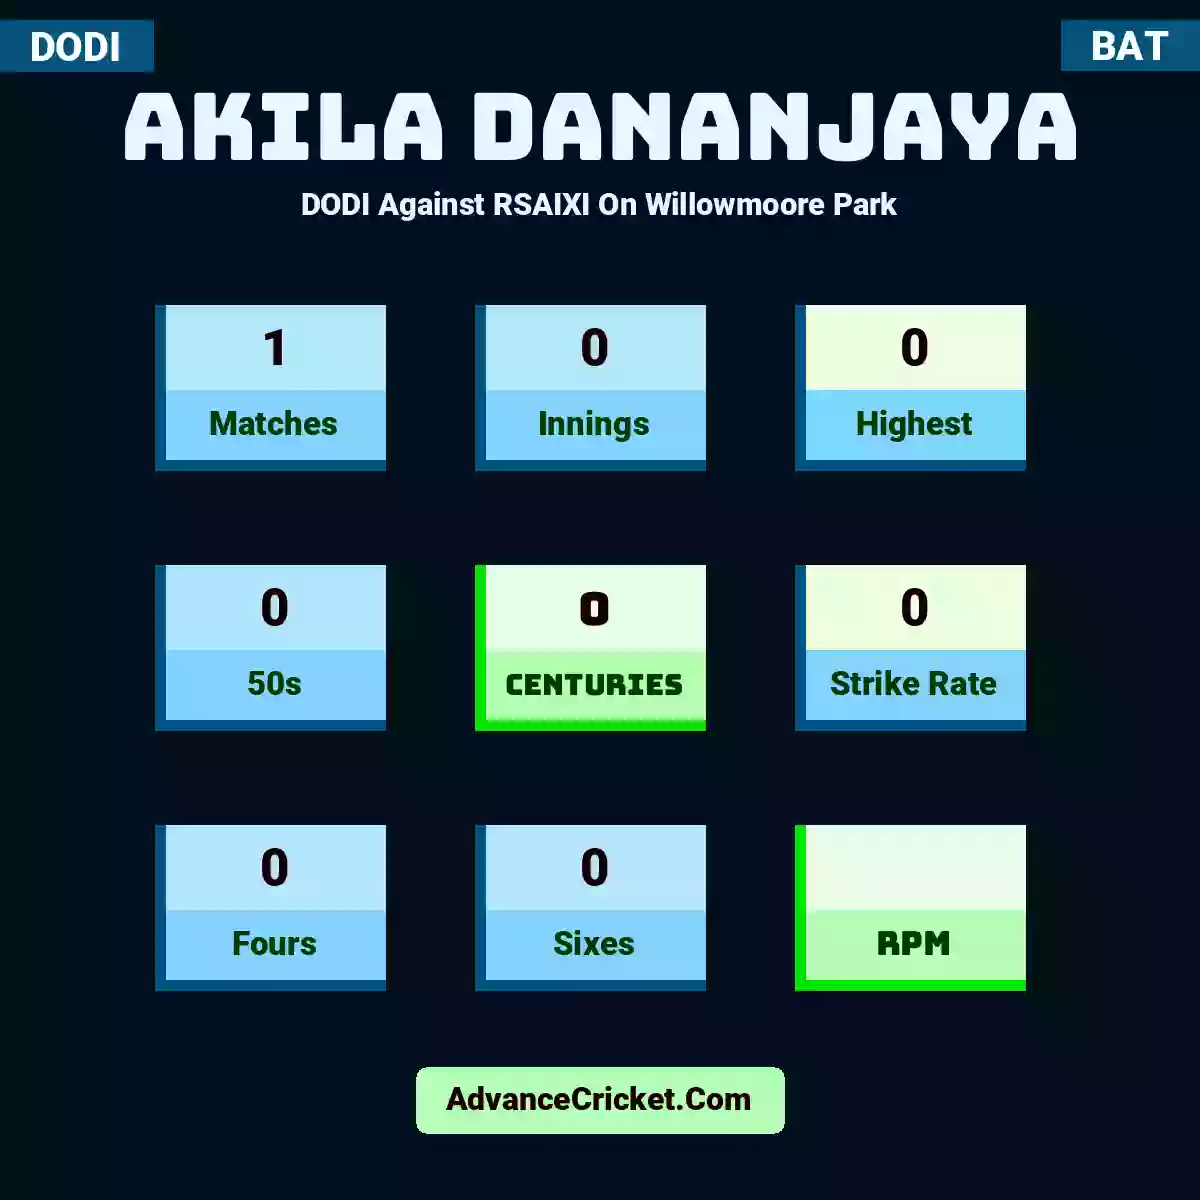 Akila Dananjaya DODI  Against RSAIXI On Willowmoore Park, Akila Dananjaya played 1 matches, scored 0 runs as highest, 0 half-centuries, and 0 centuries, with a strike rate of 0. A.Dananjaya hit 0 fours and 0 sixes.